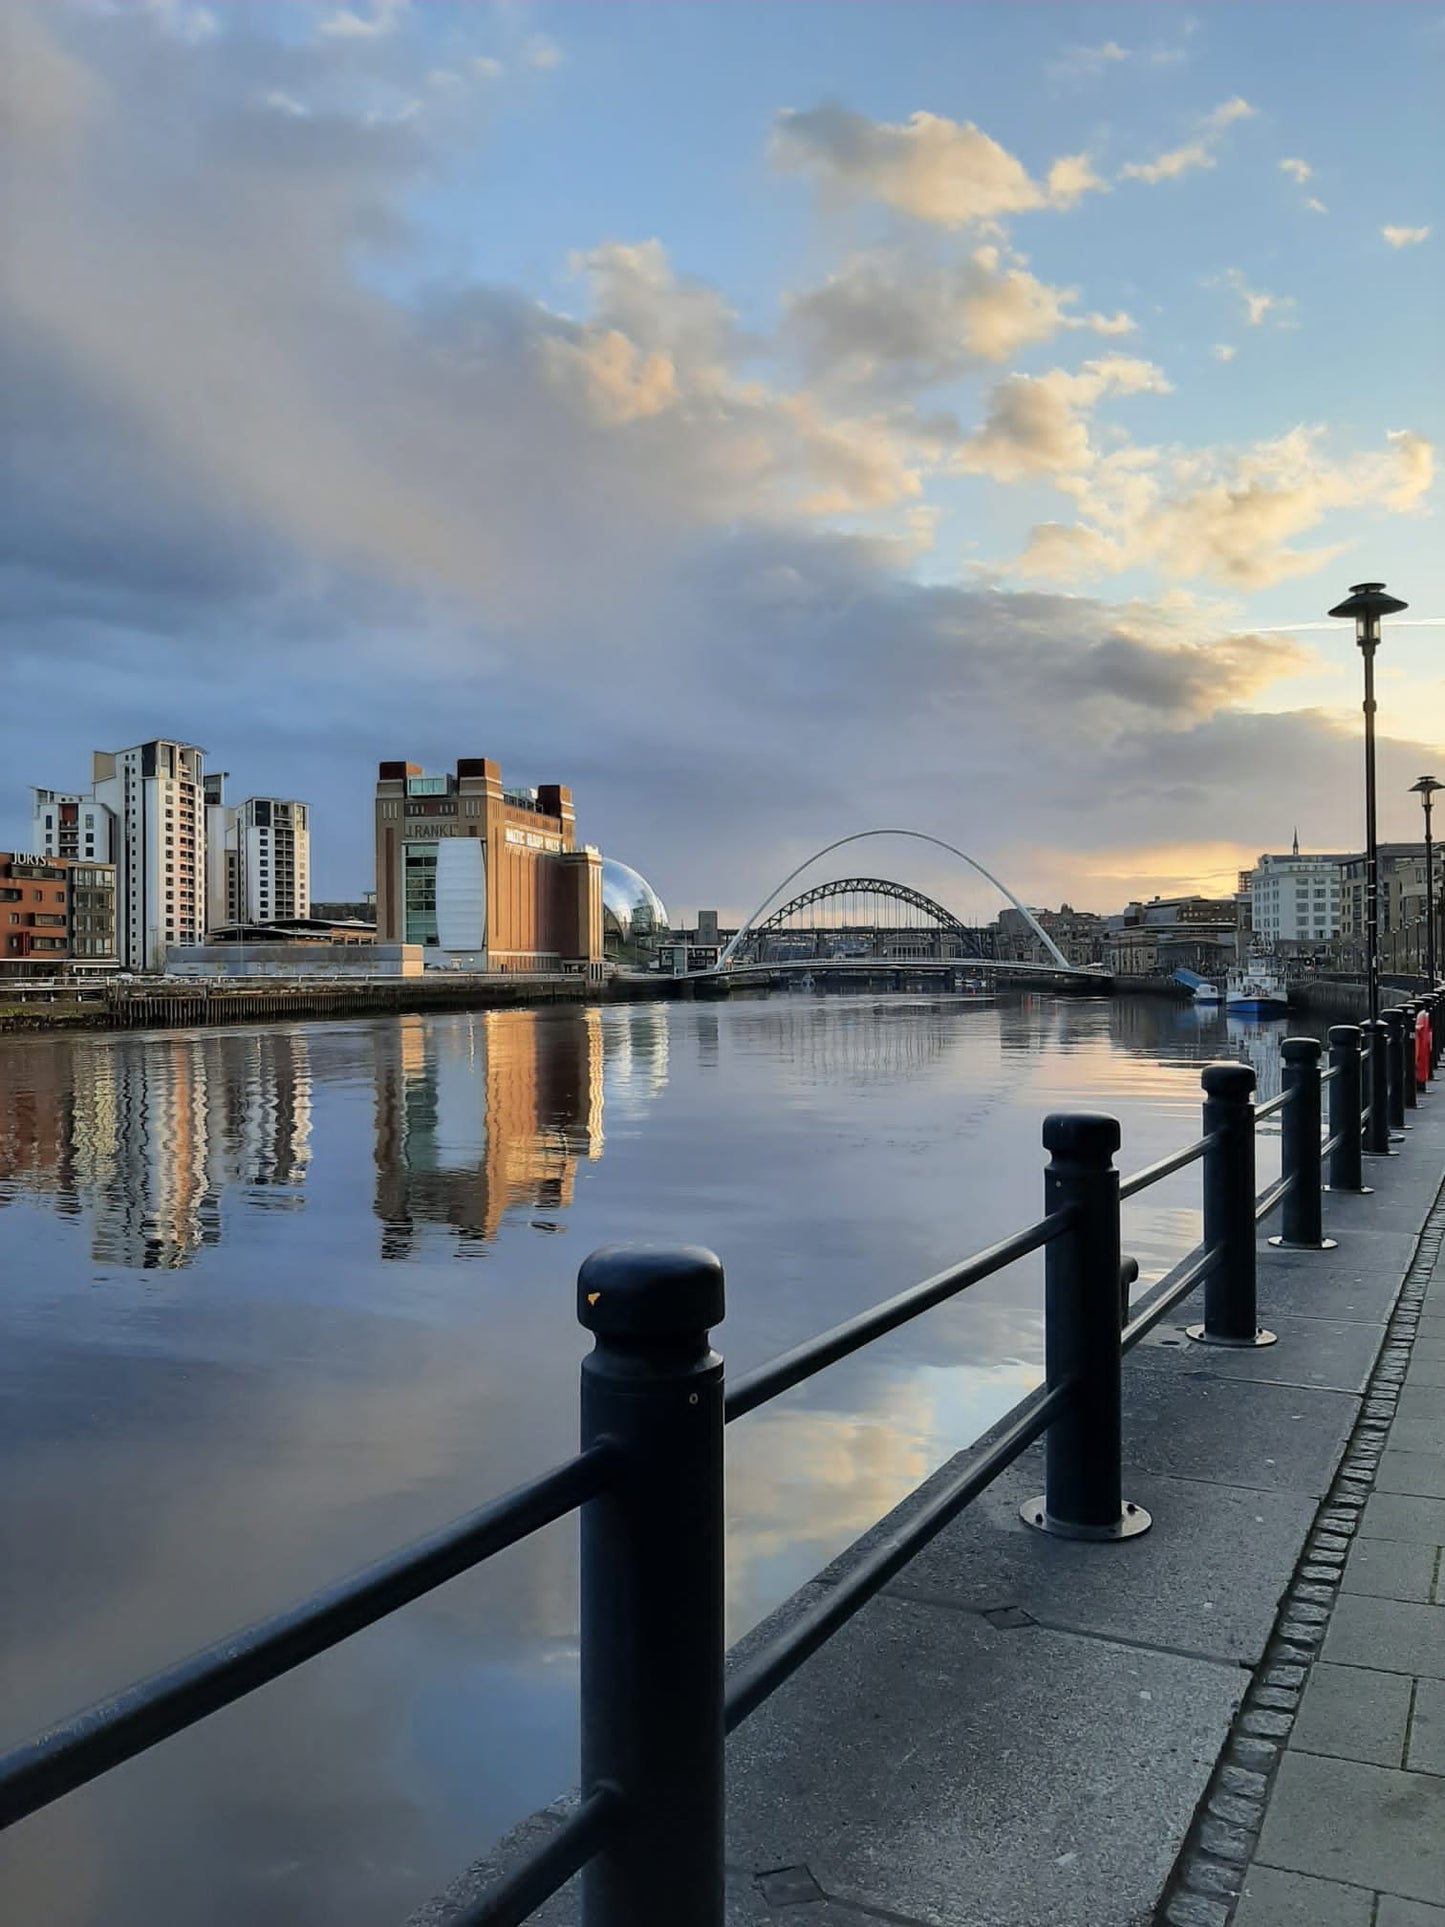 UK Cities: Newcastle